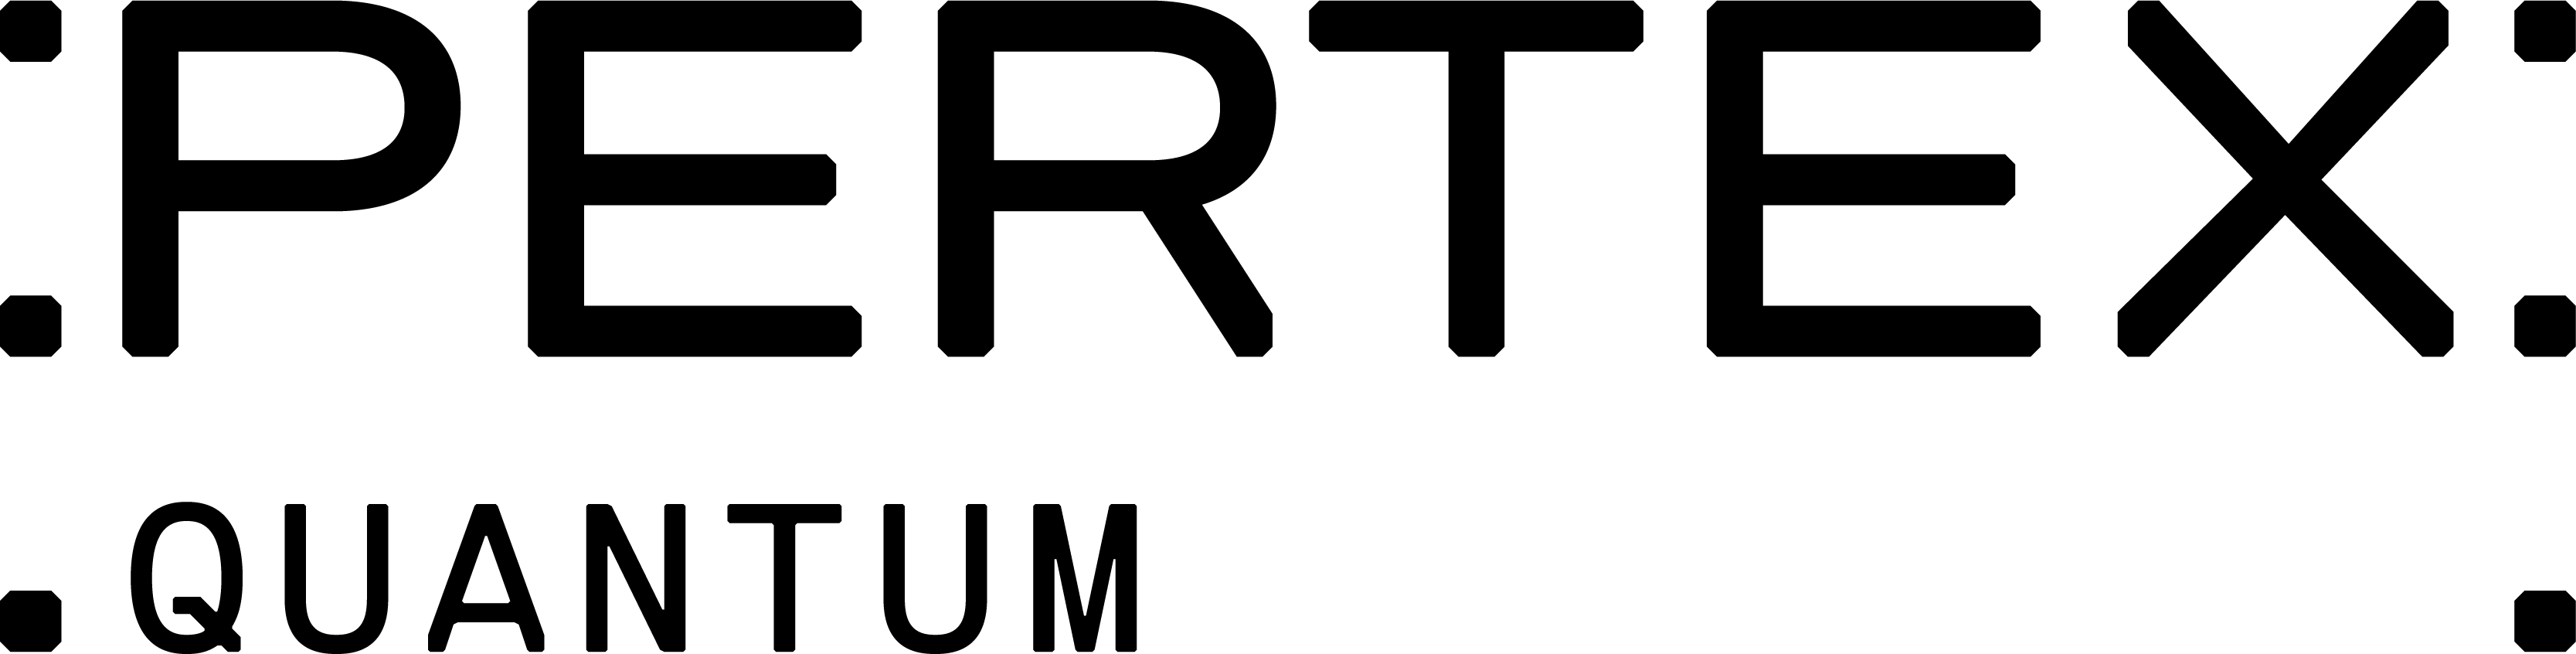 Pertex brand logo